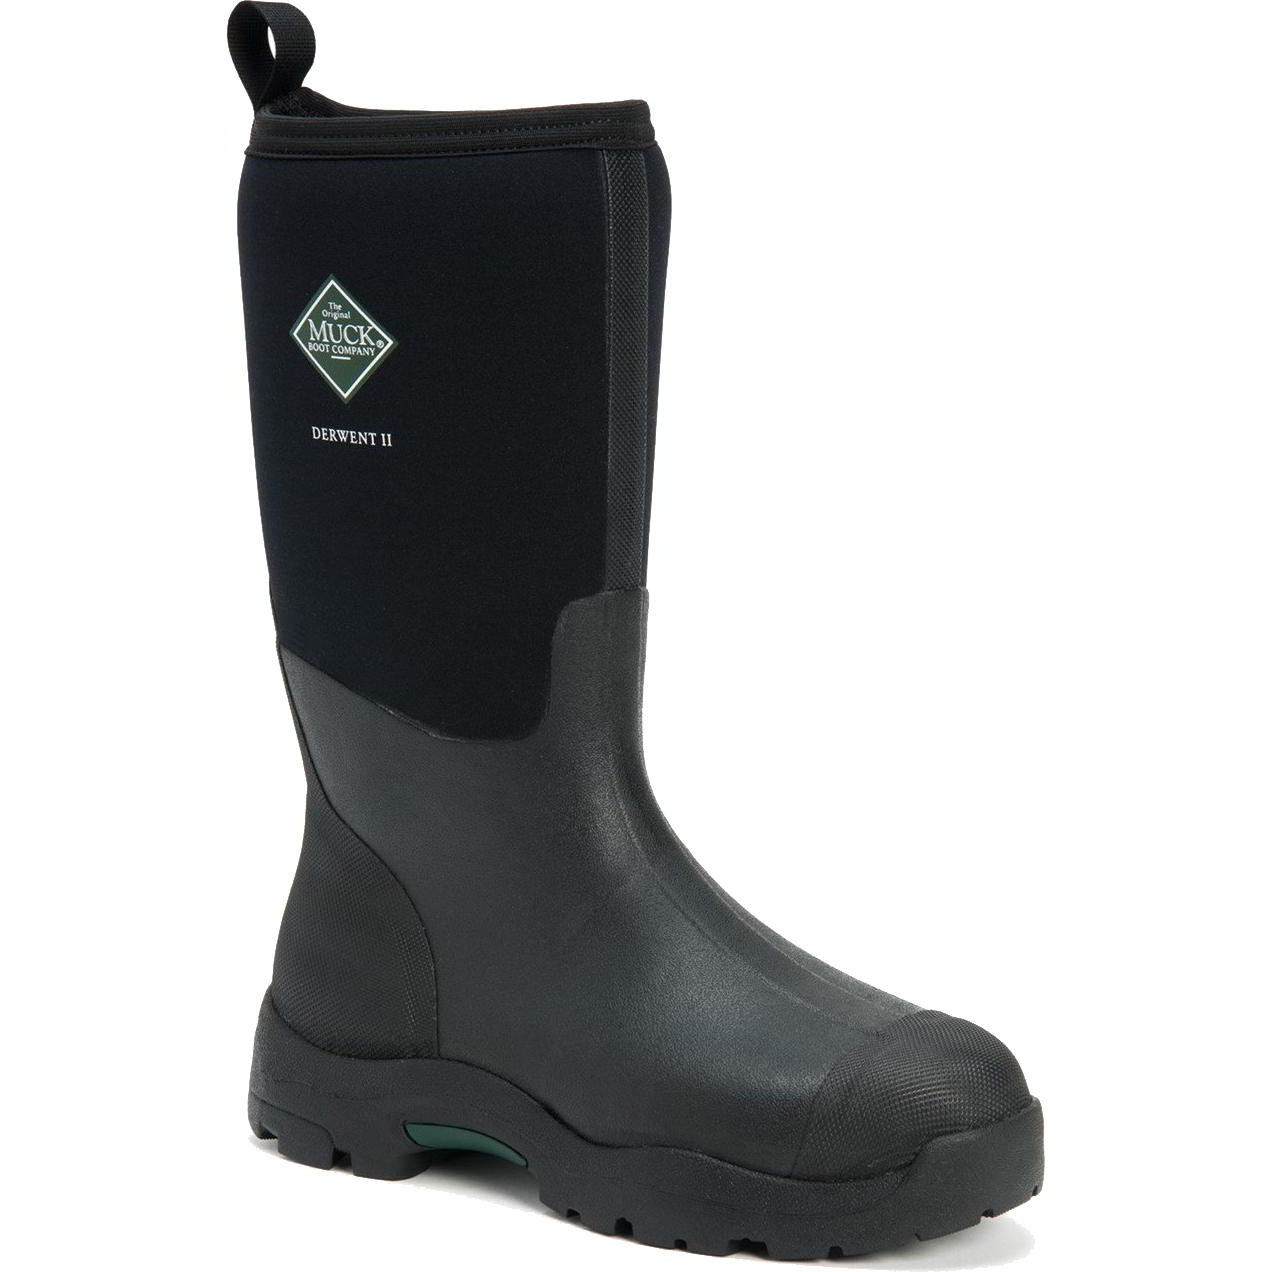 Muck Boots Mens Derwent II Neoprene Wellies Rain - Black 2951